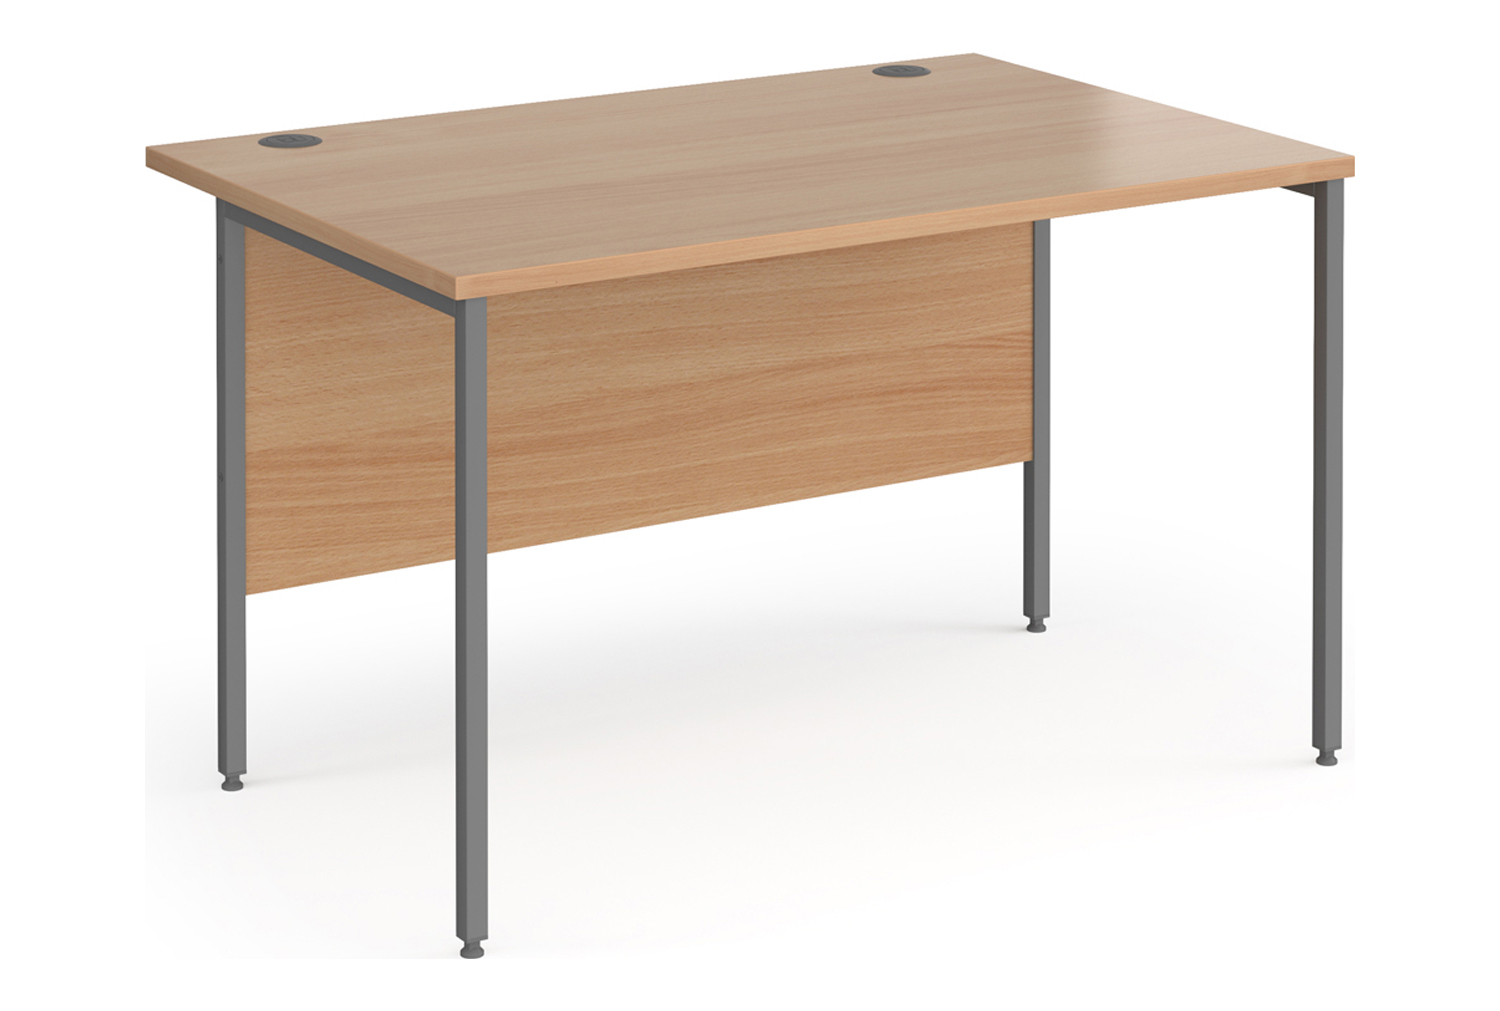 Value Line Classic+ Rectangular H-Leg Office Desk (Graphite Leg), 120wx80dx73h (cm), Beech, Express Delivery